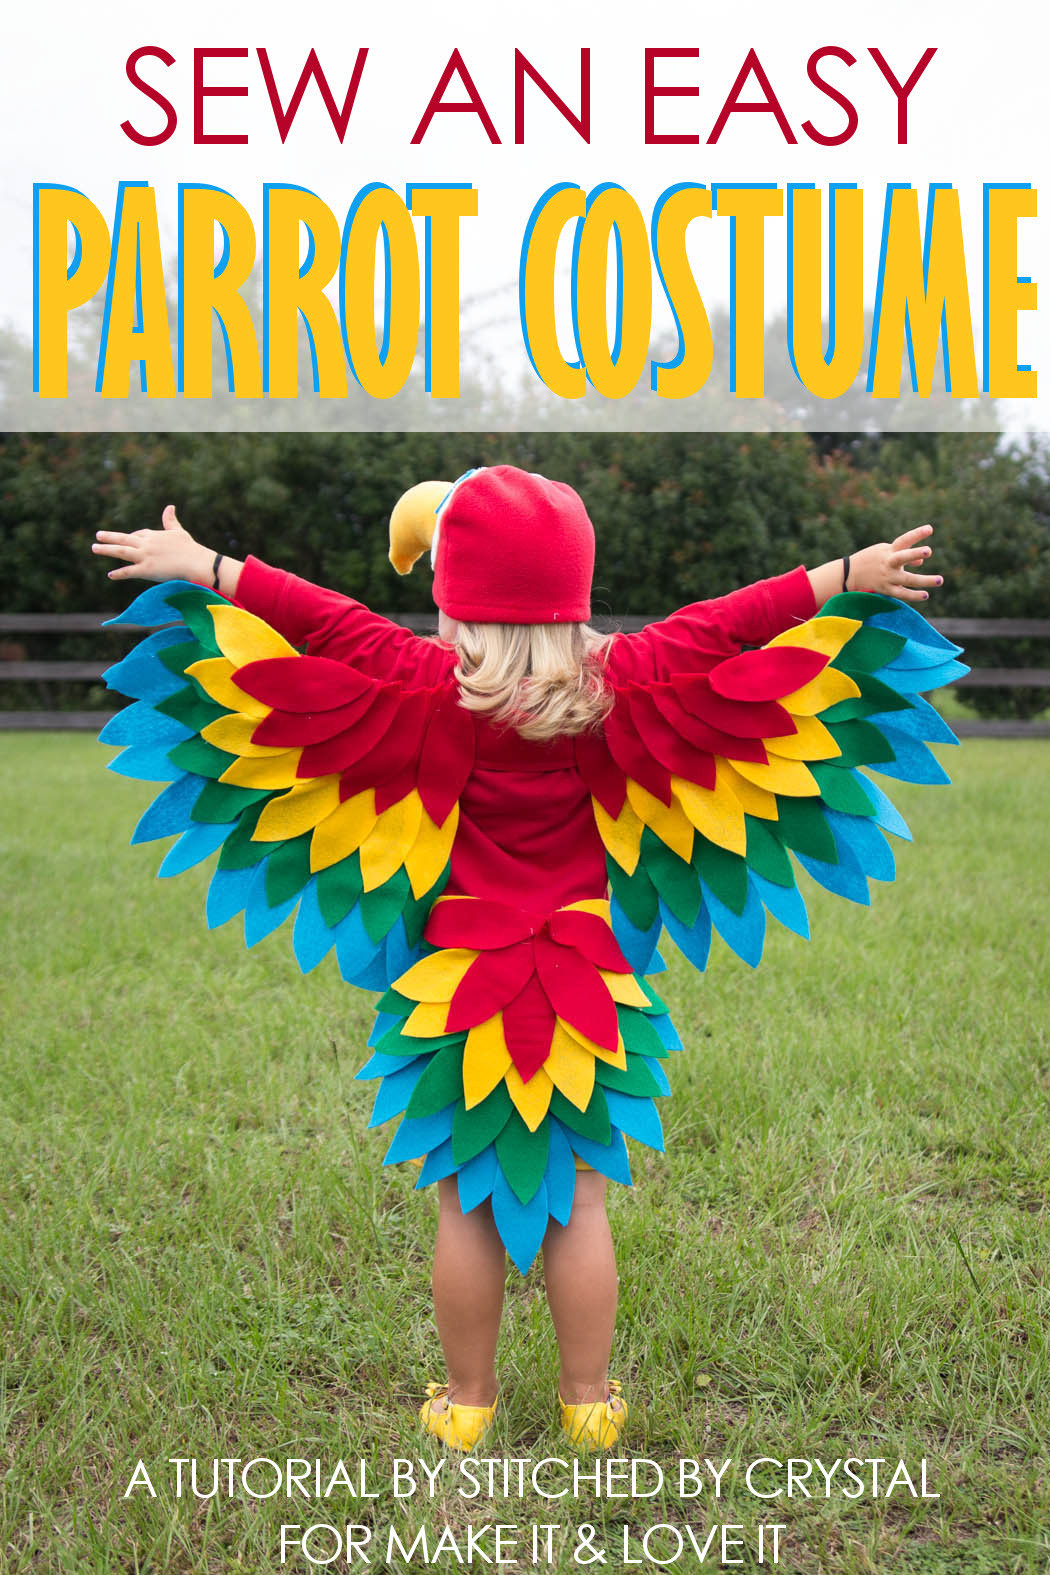 Bird Costume DIY
 Parrot Costume DIY How to Make a Homemade Parrot Costume